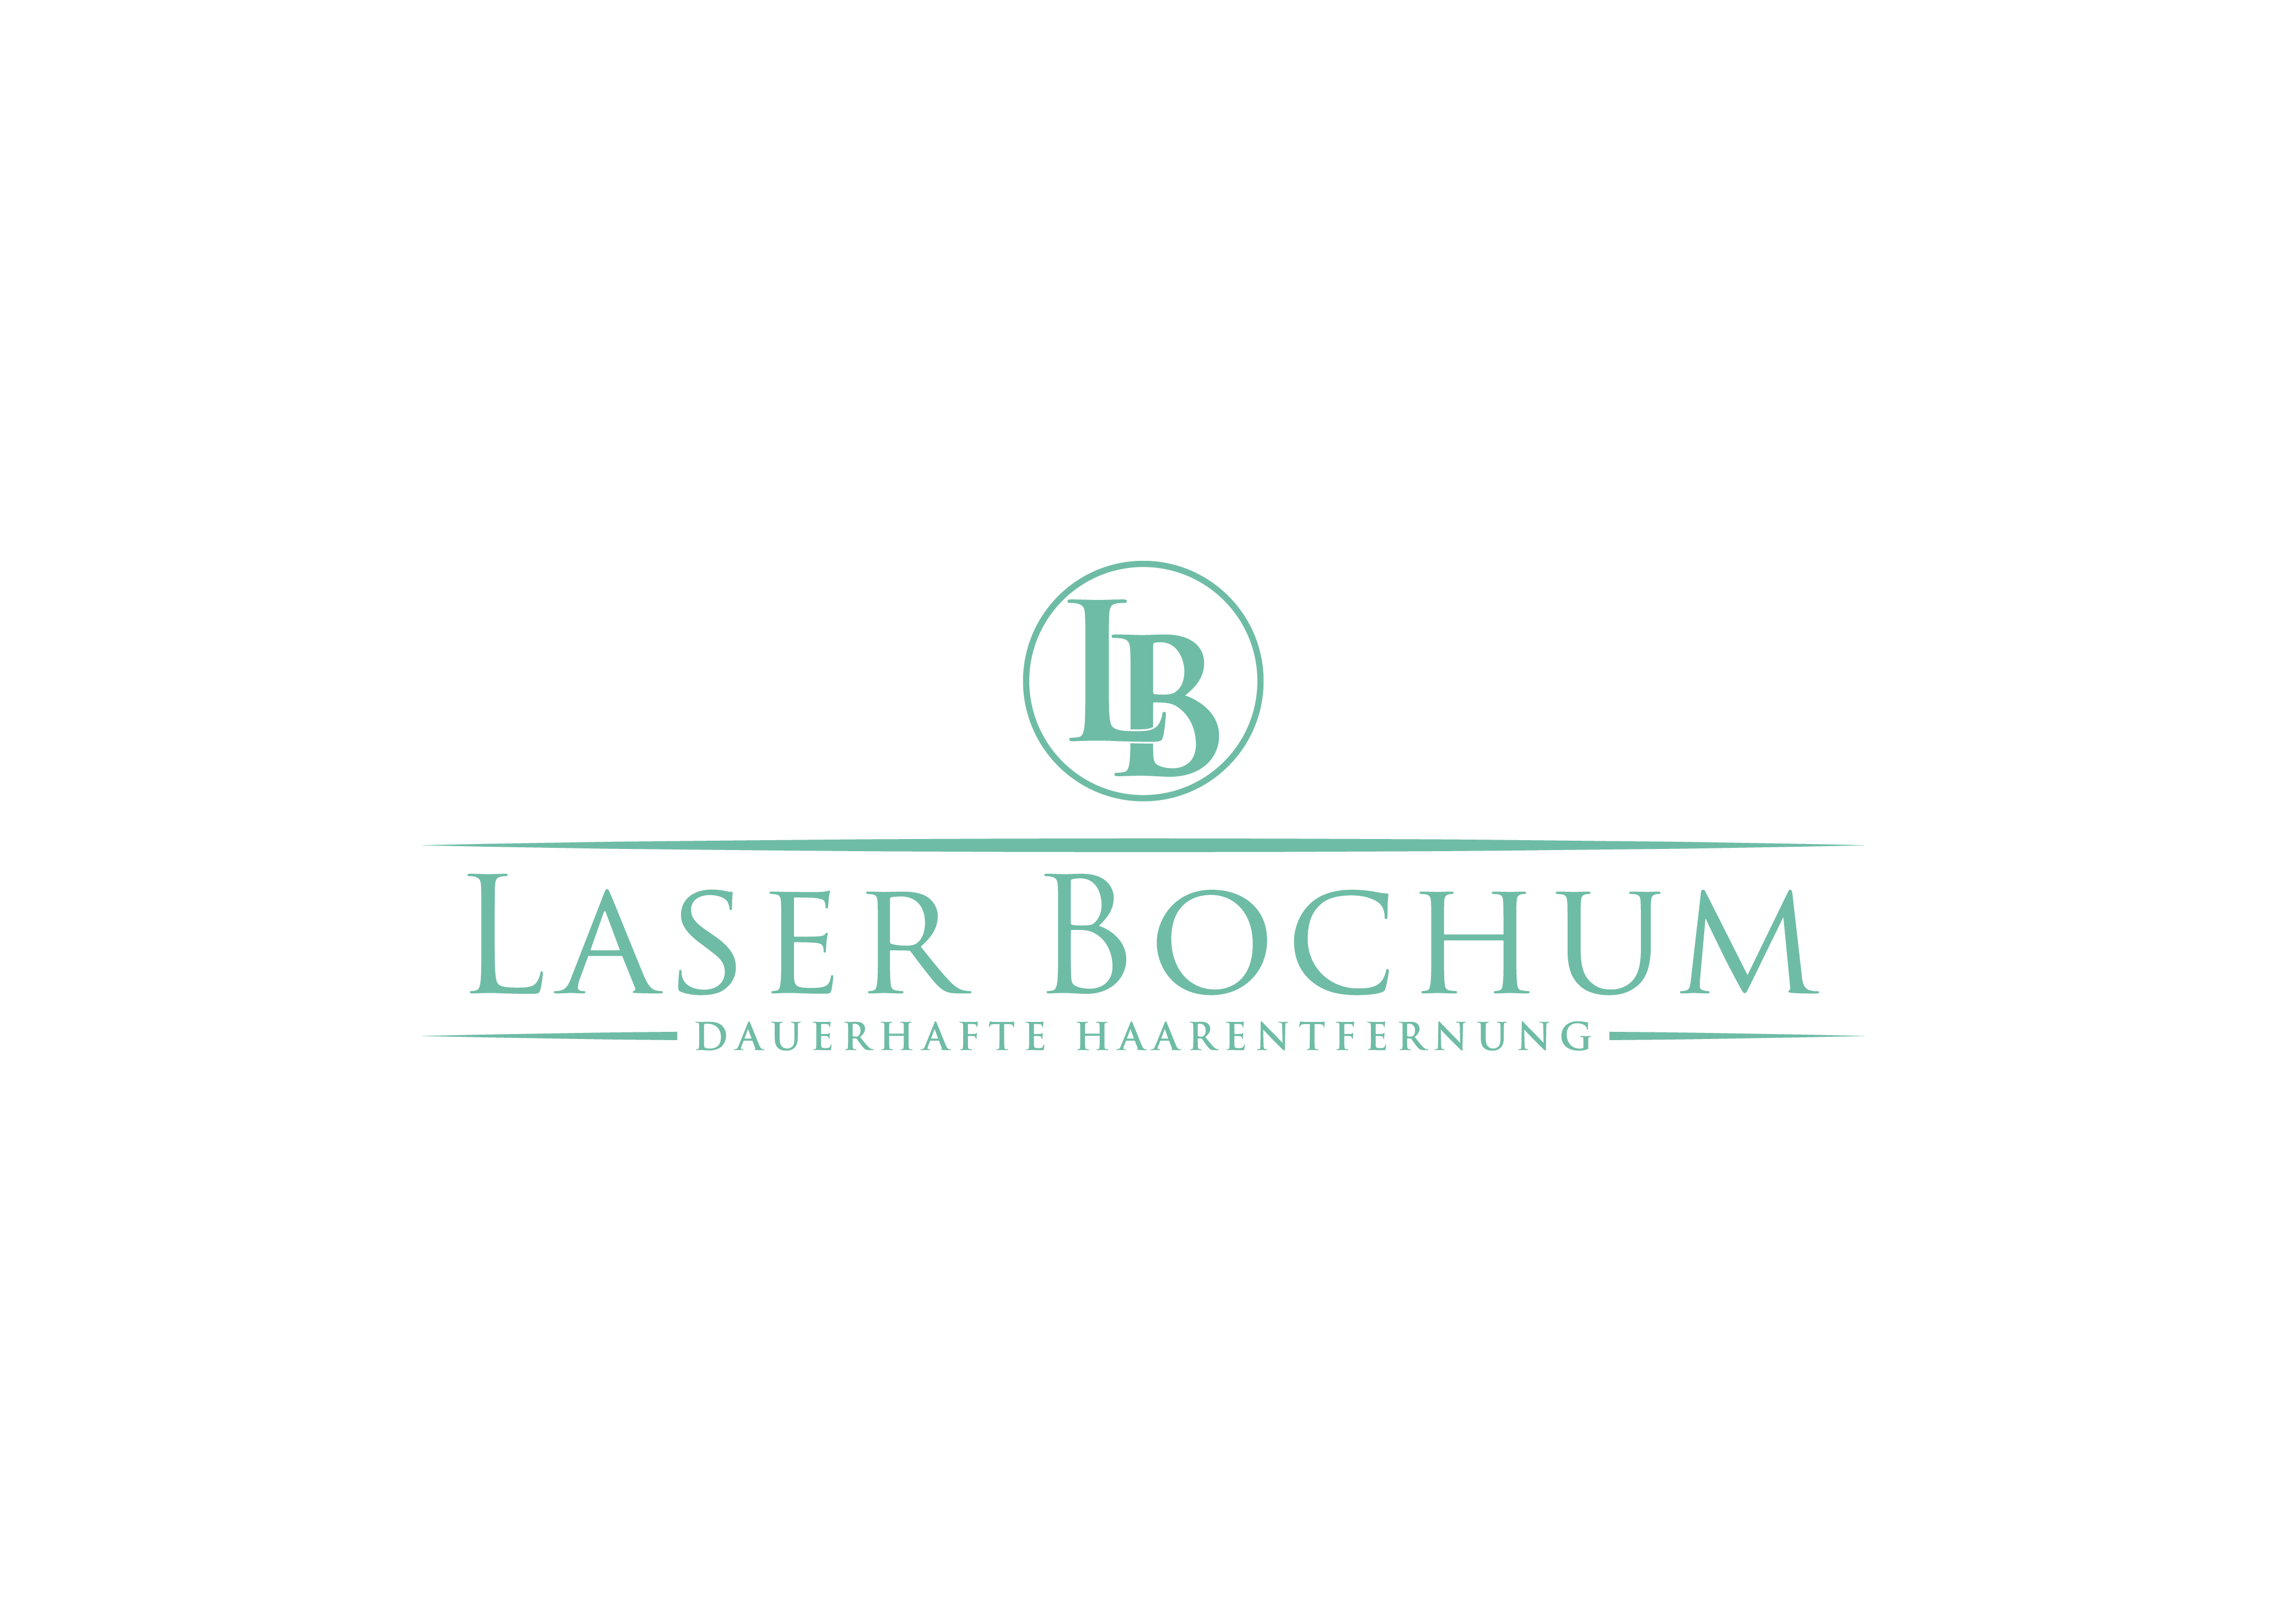 Laser Bochum